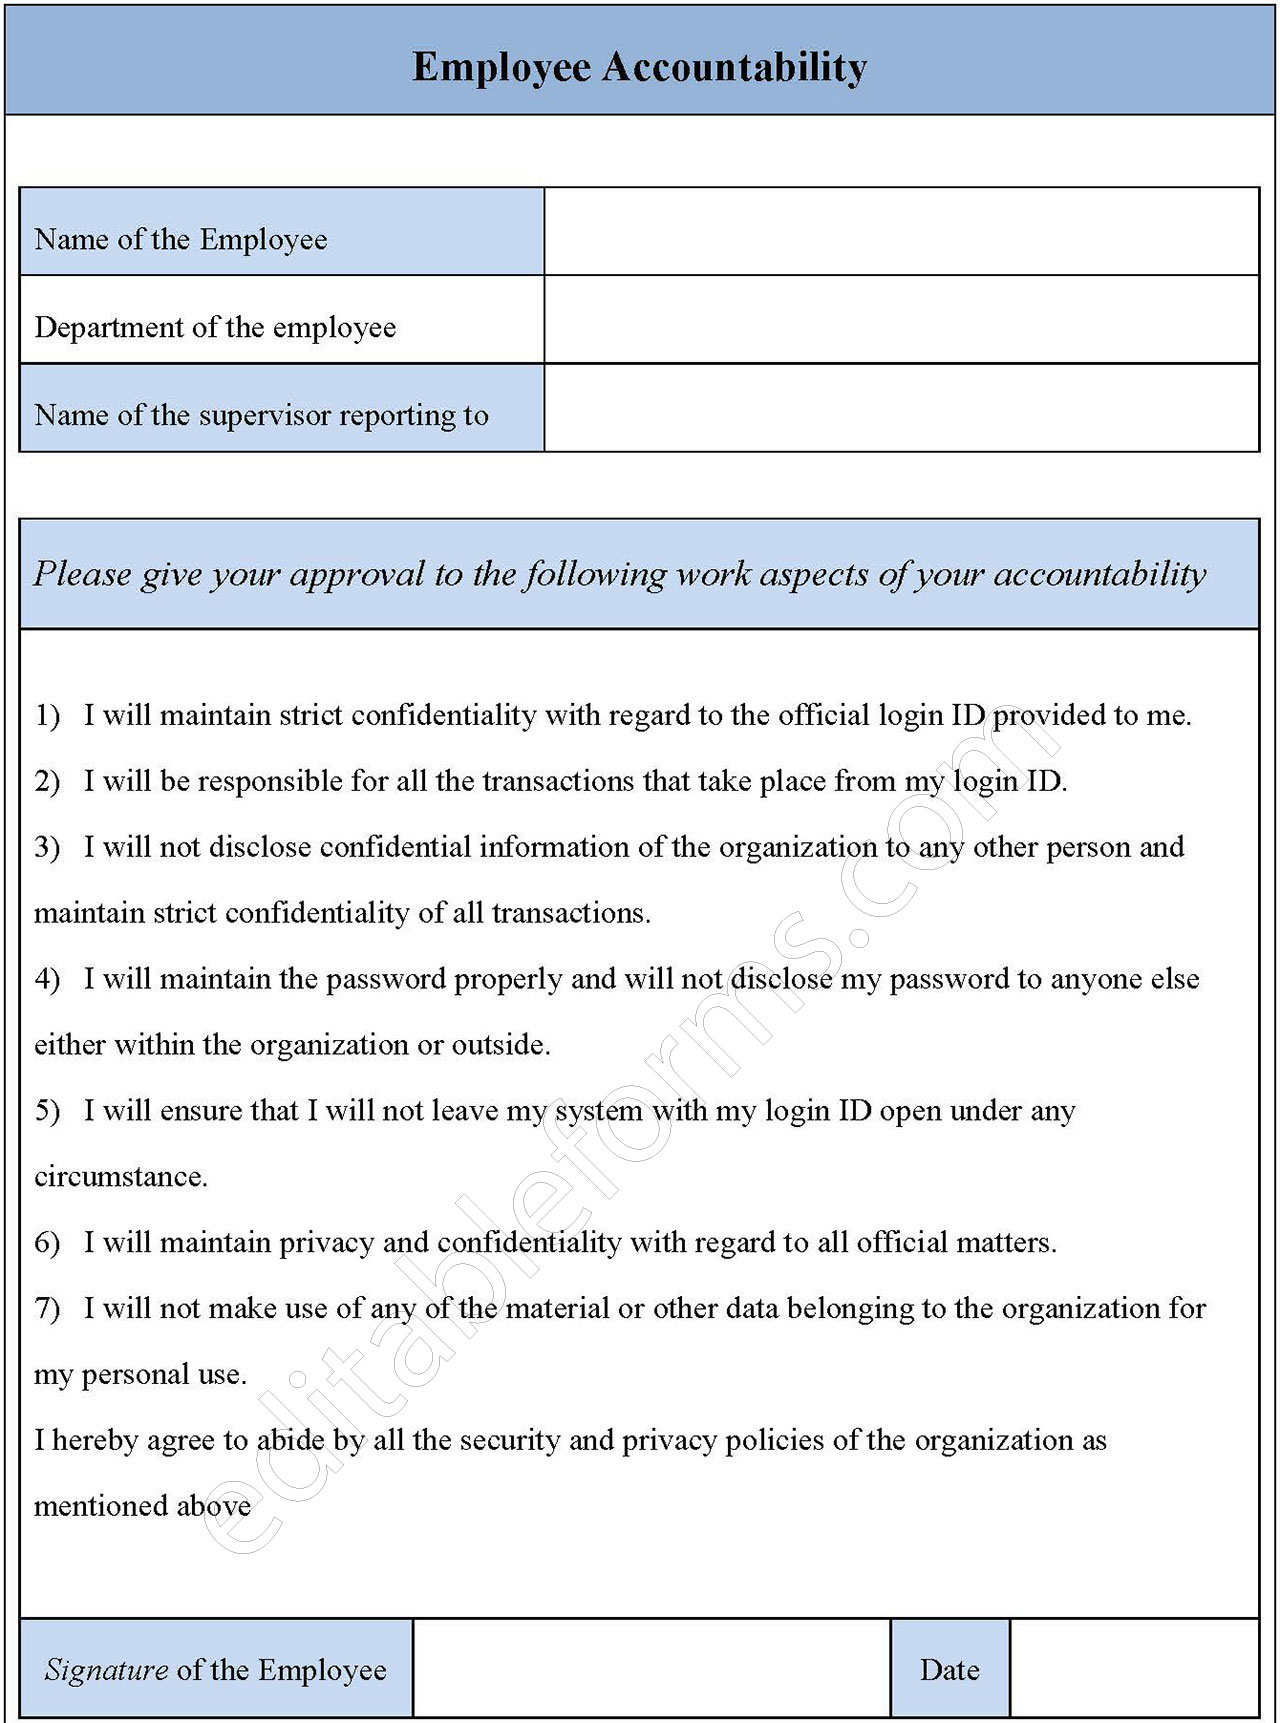 Employee Accountability Form